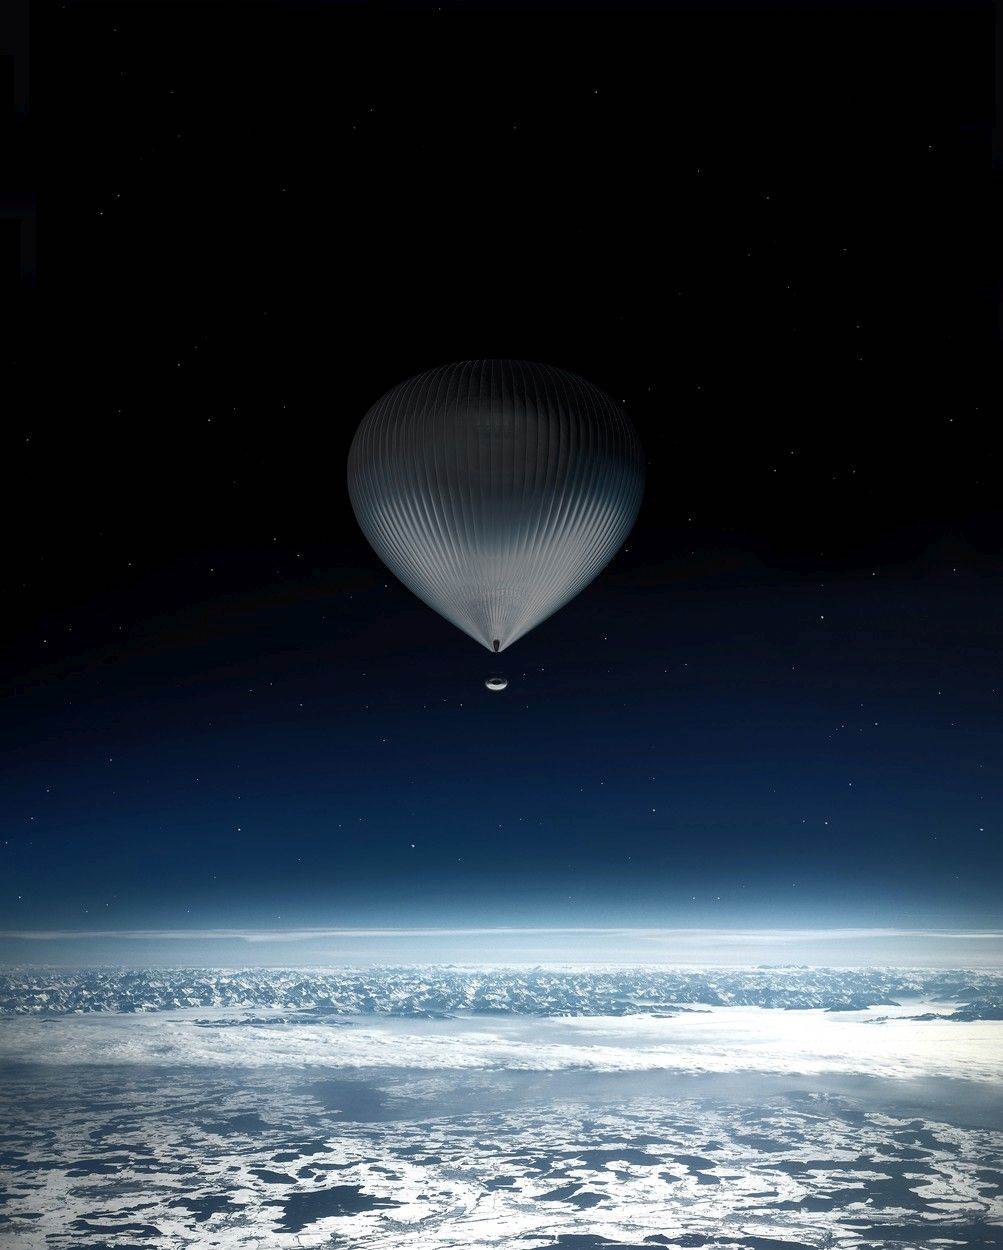  Zephalto balon svemir (1).jpg 